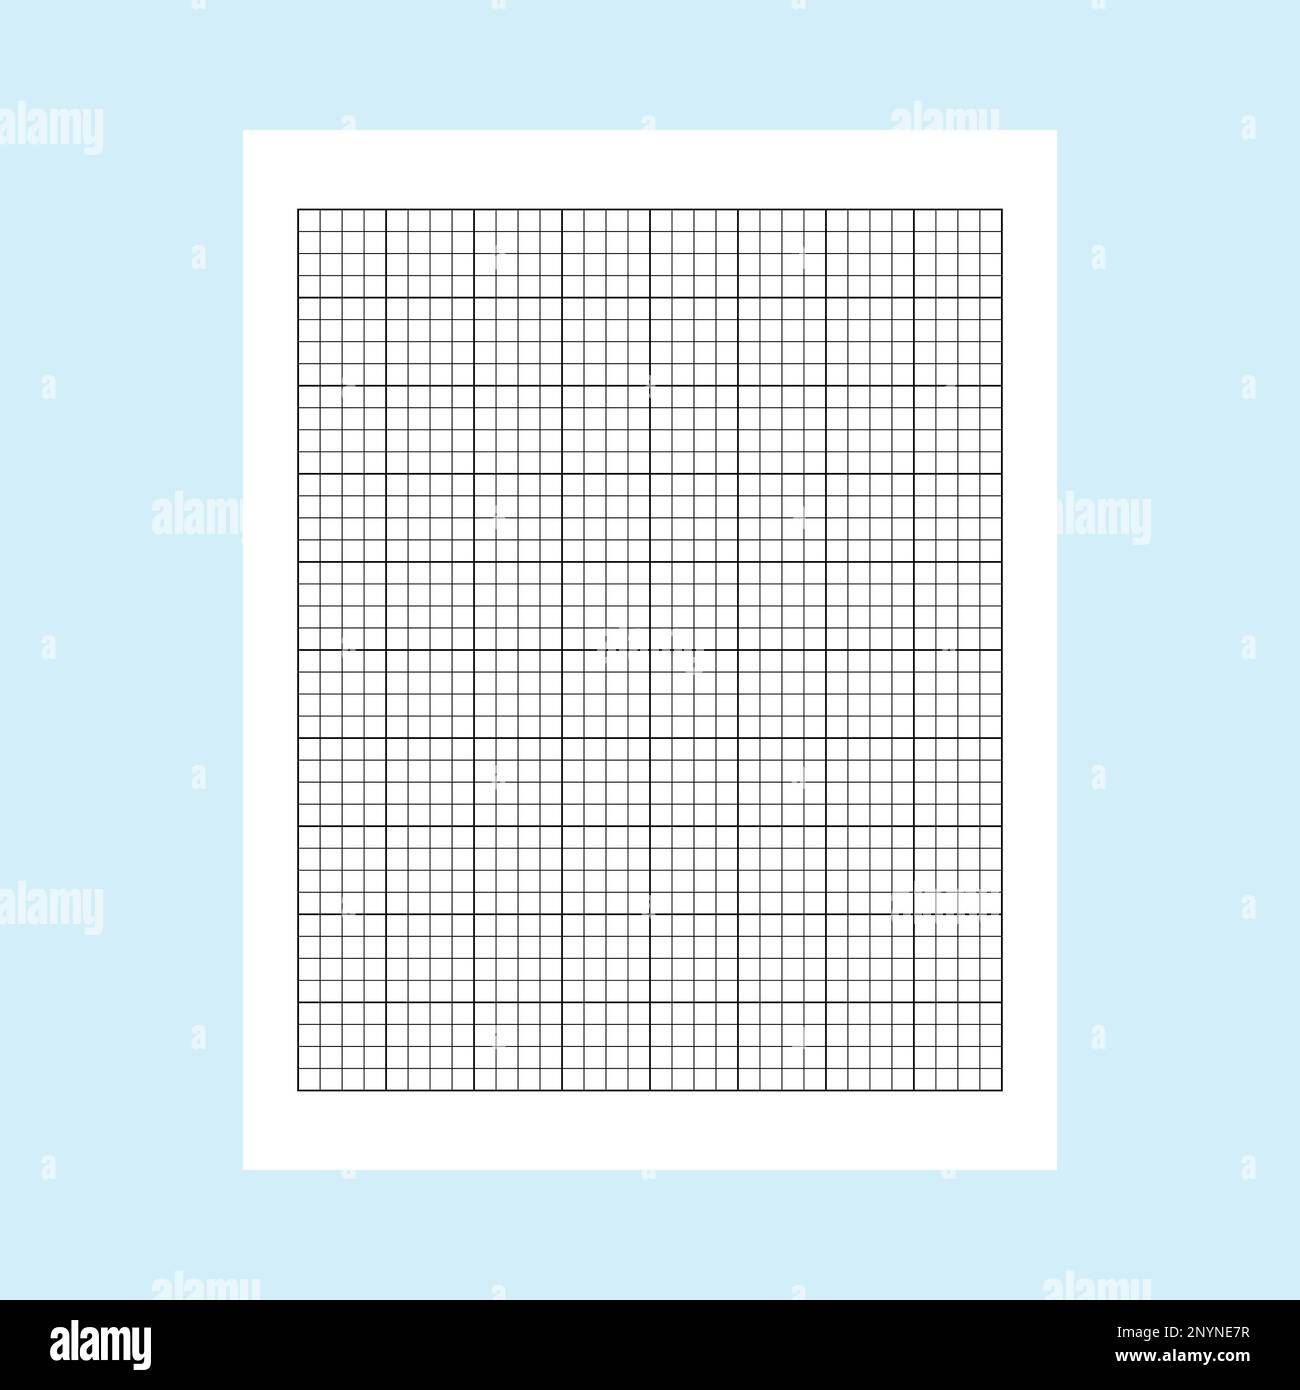 My Knitting Journal - KDP Interior Graphic by anatarouca · Creative Fabrica